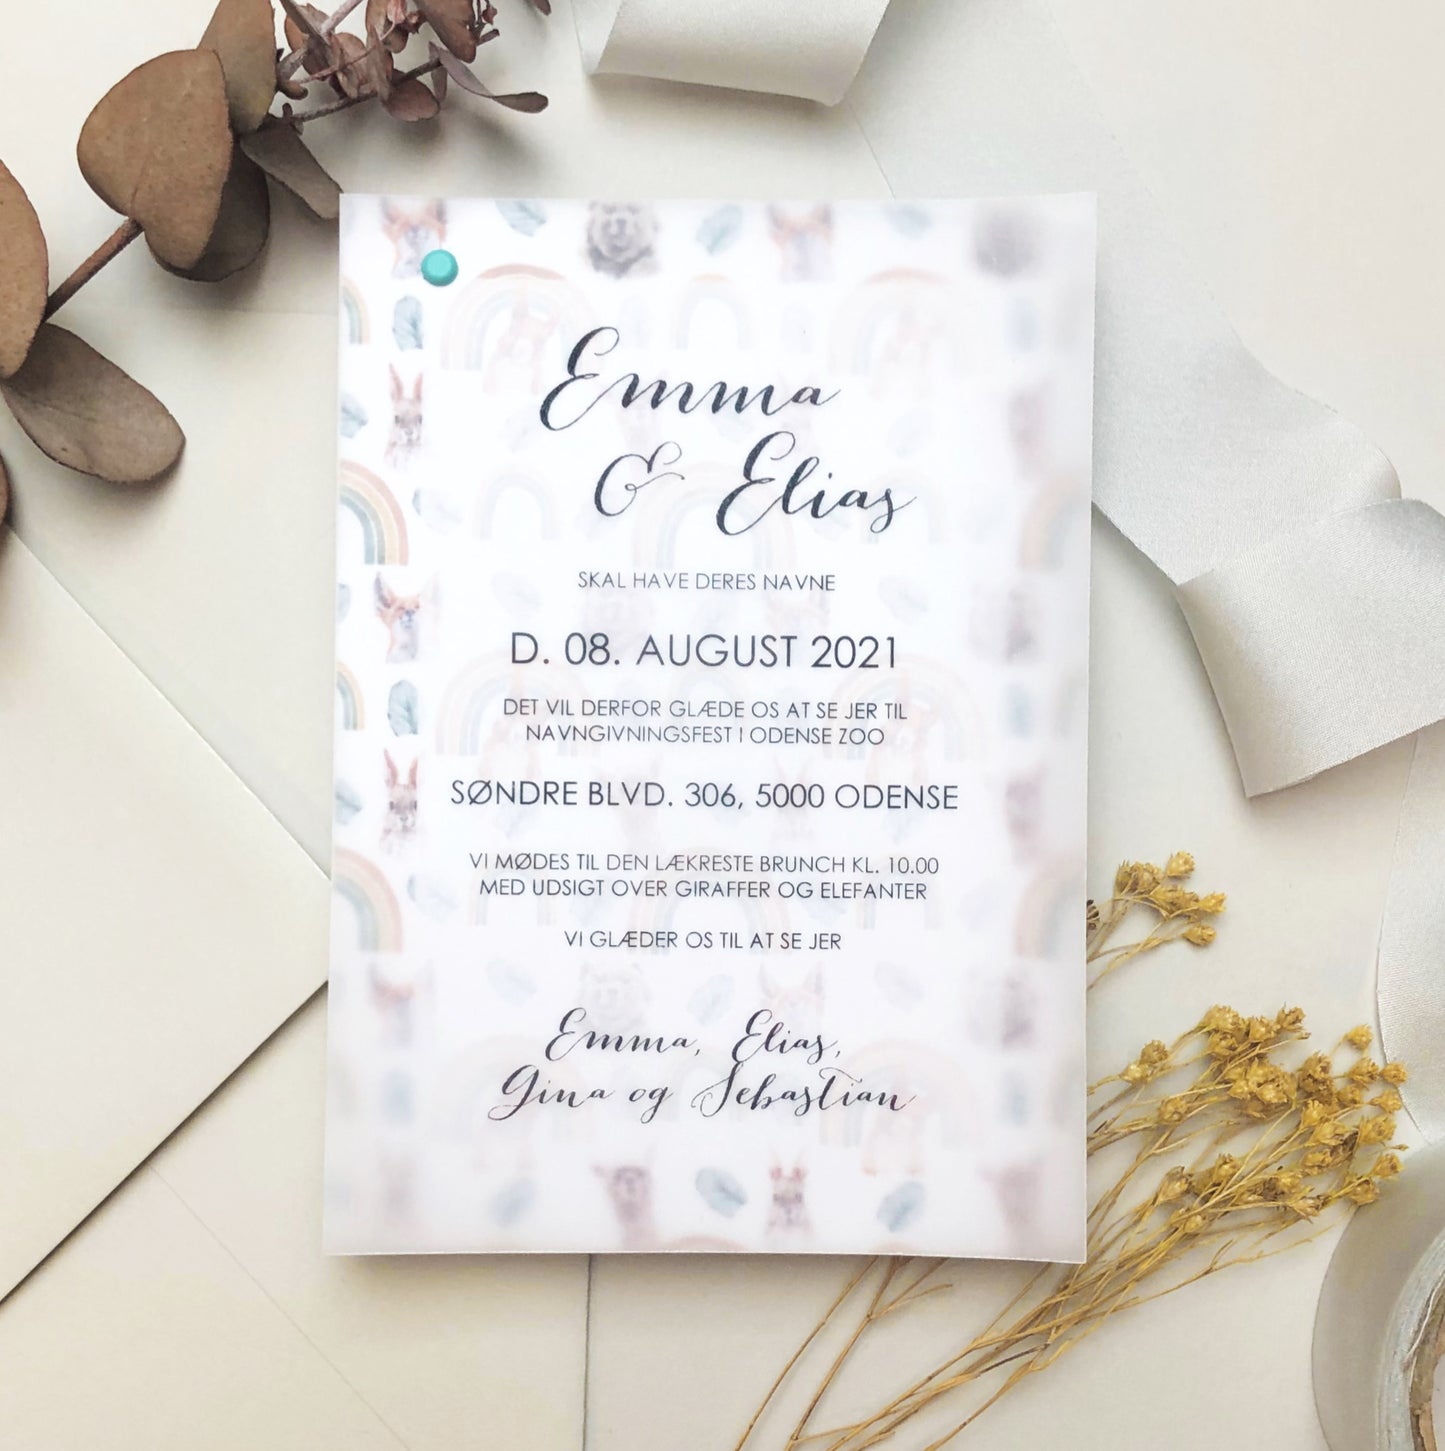 Emma & Elias invitationen